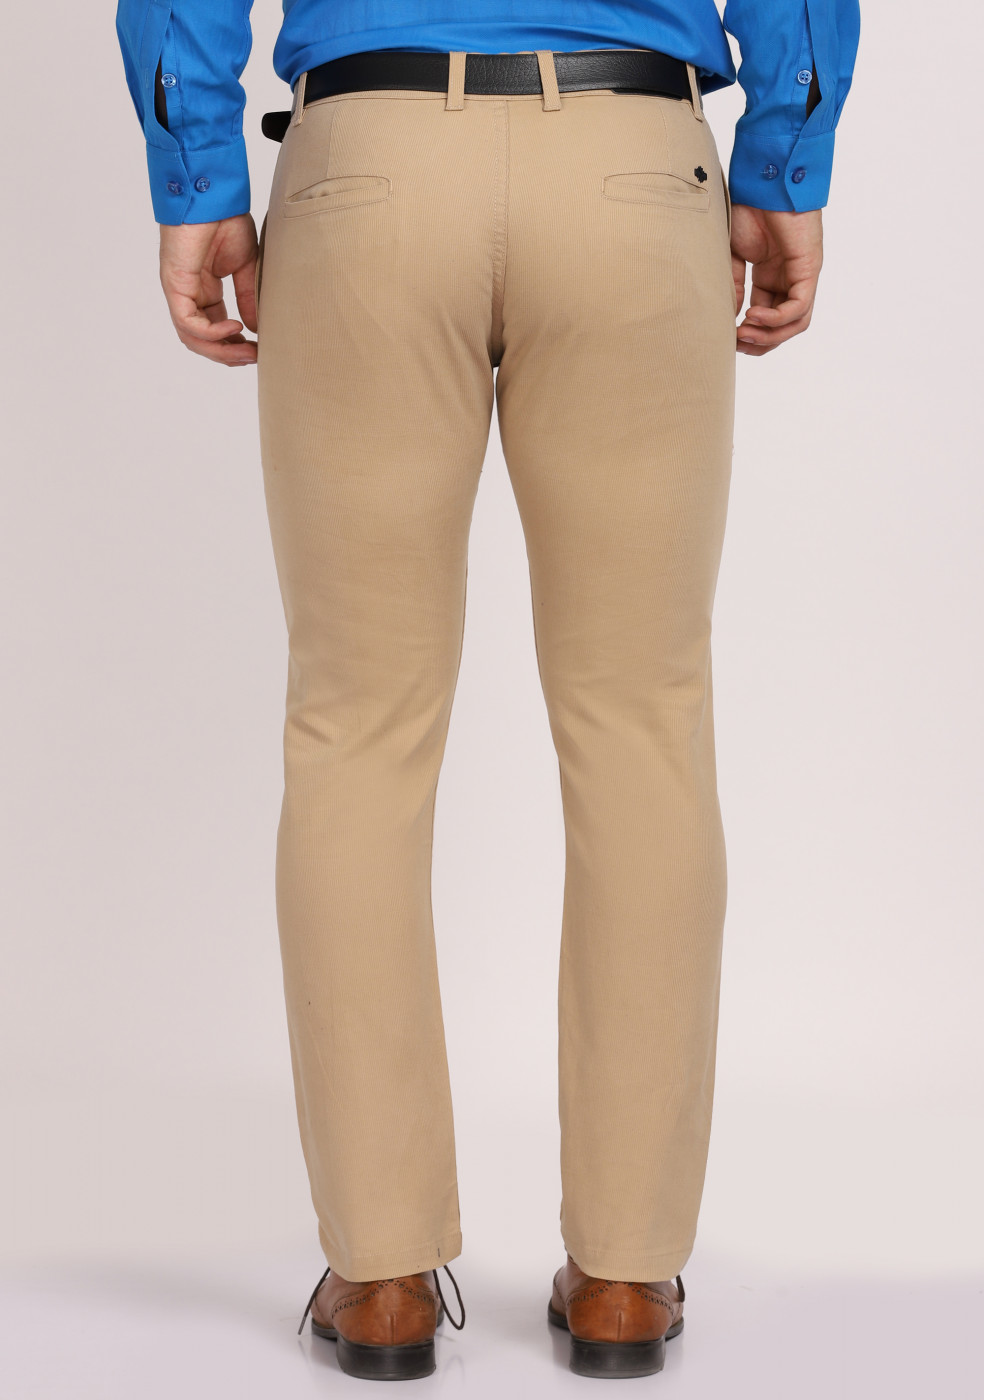 ASHTOM Fawn Color Formal Cotton Trouser Regular Fit For Men